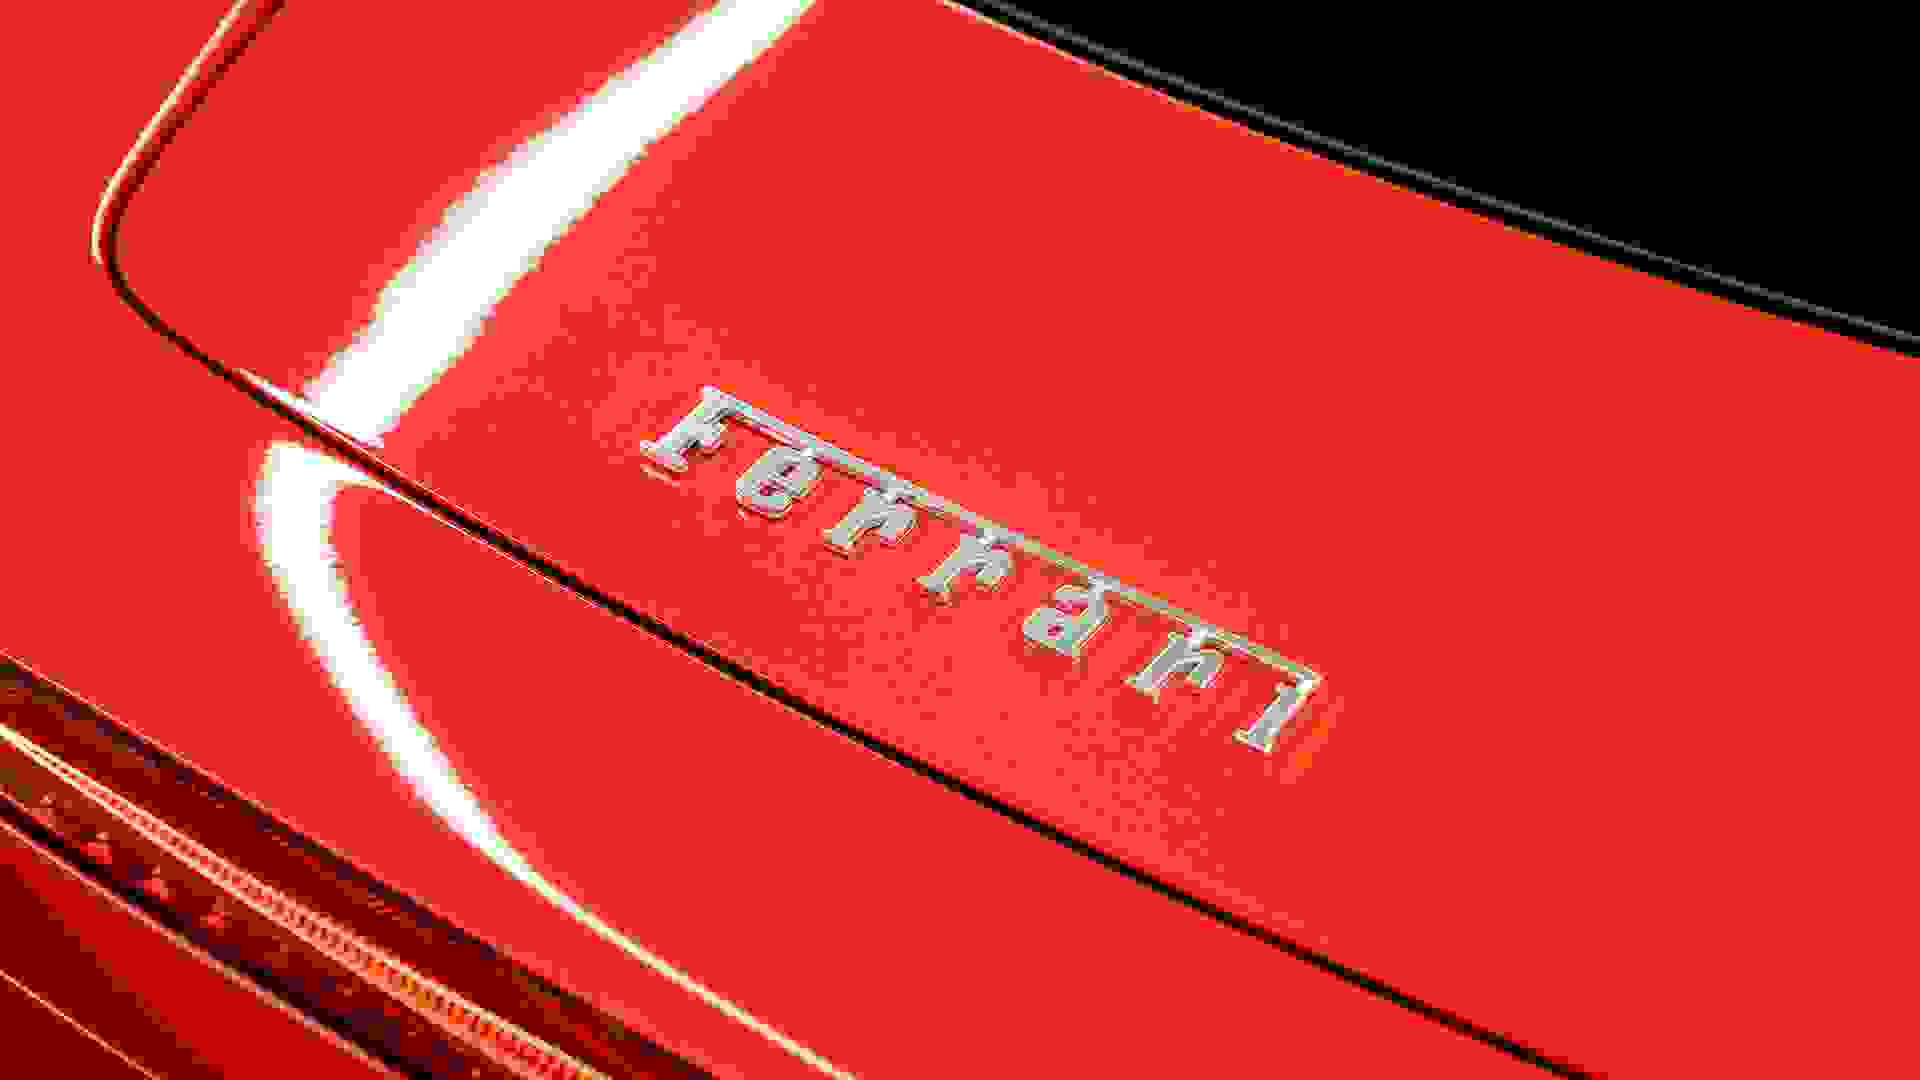 Ferrari 458 Photo 4744eee6-313d-4cb2-bcf1-8df04033becc.jpg